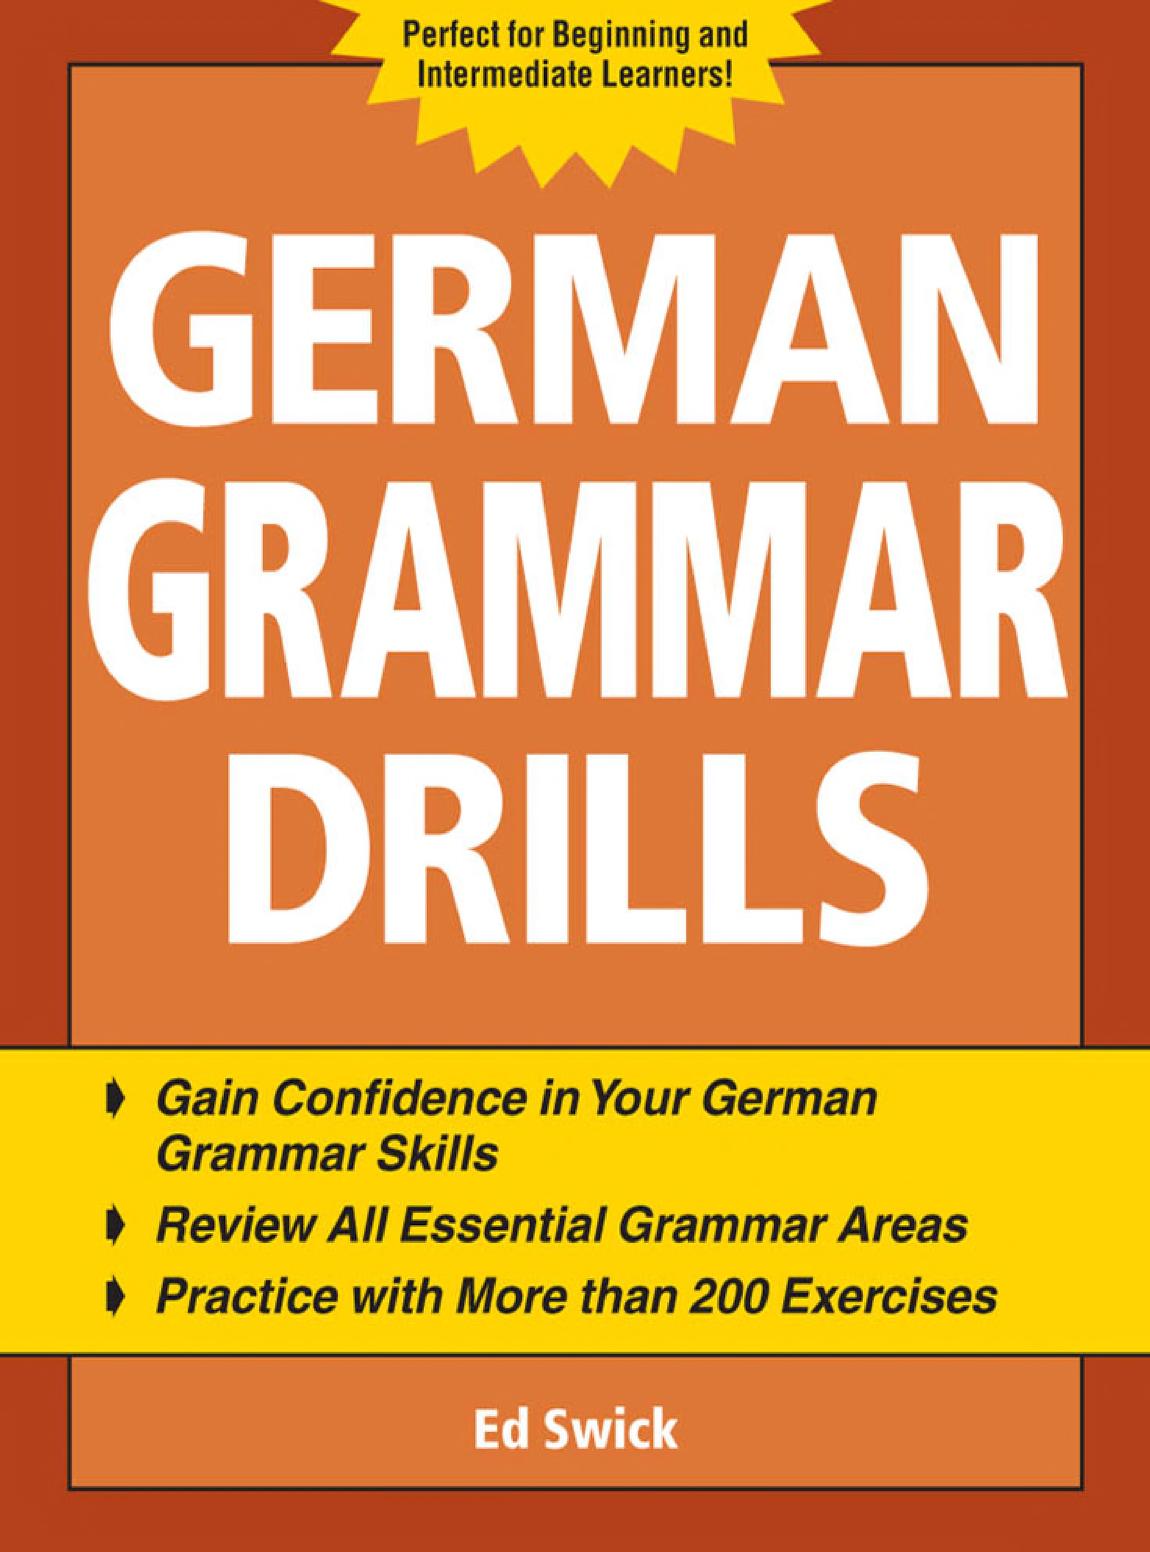 German grammar book pdf free download forex simulator free download